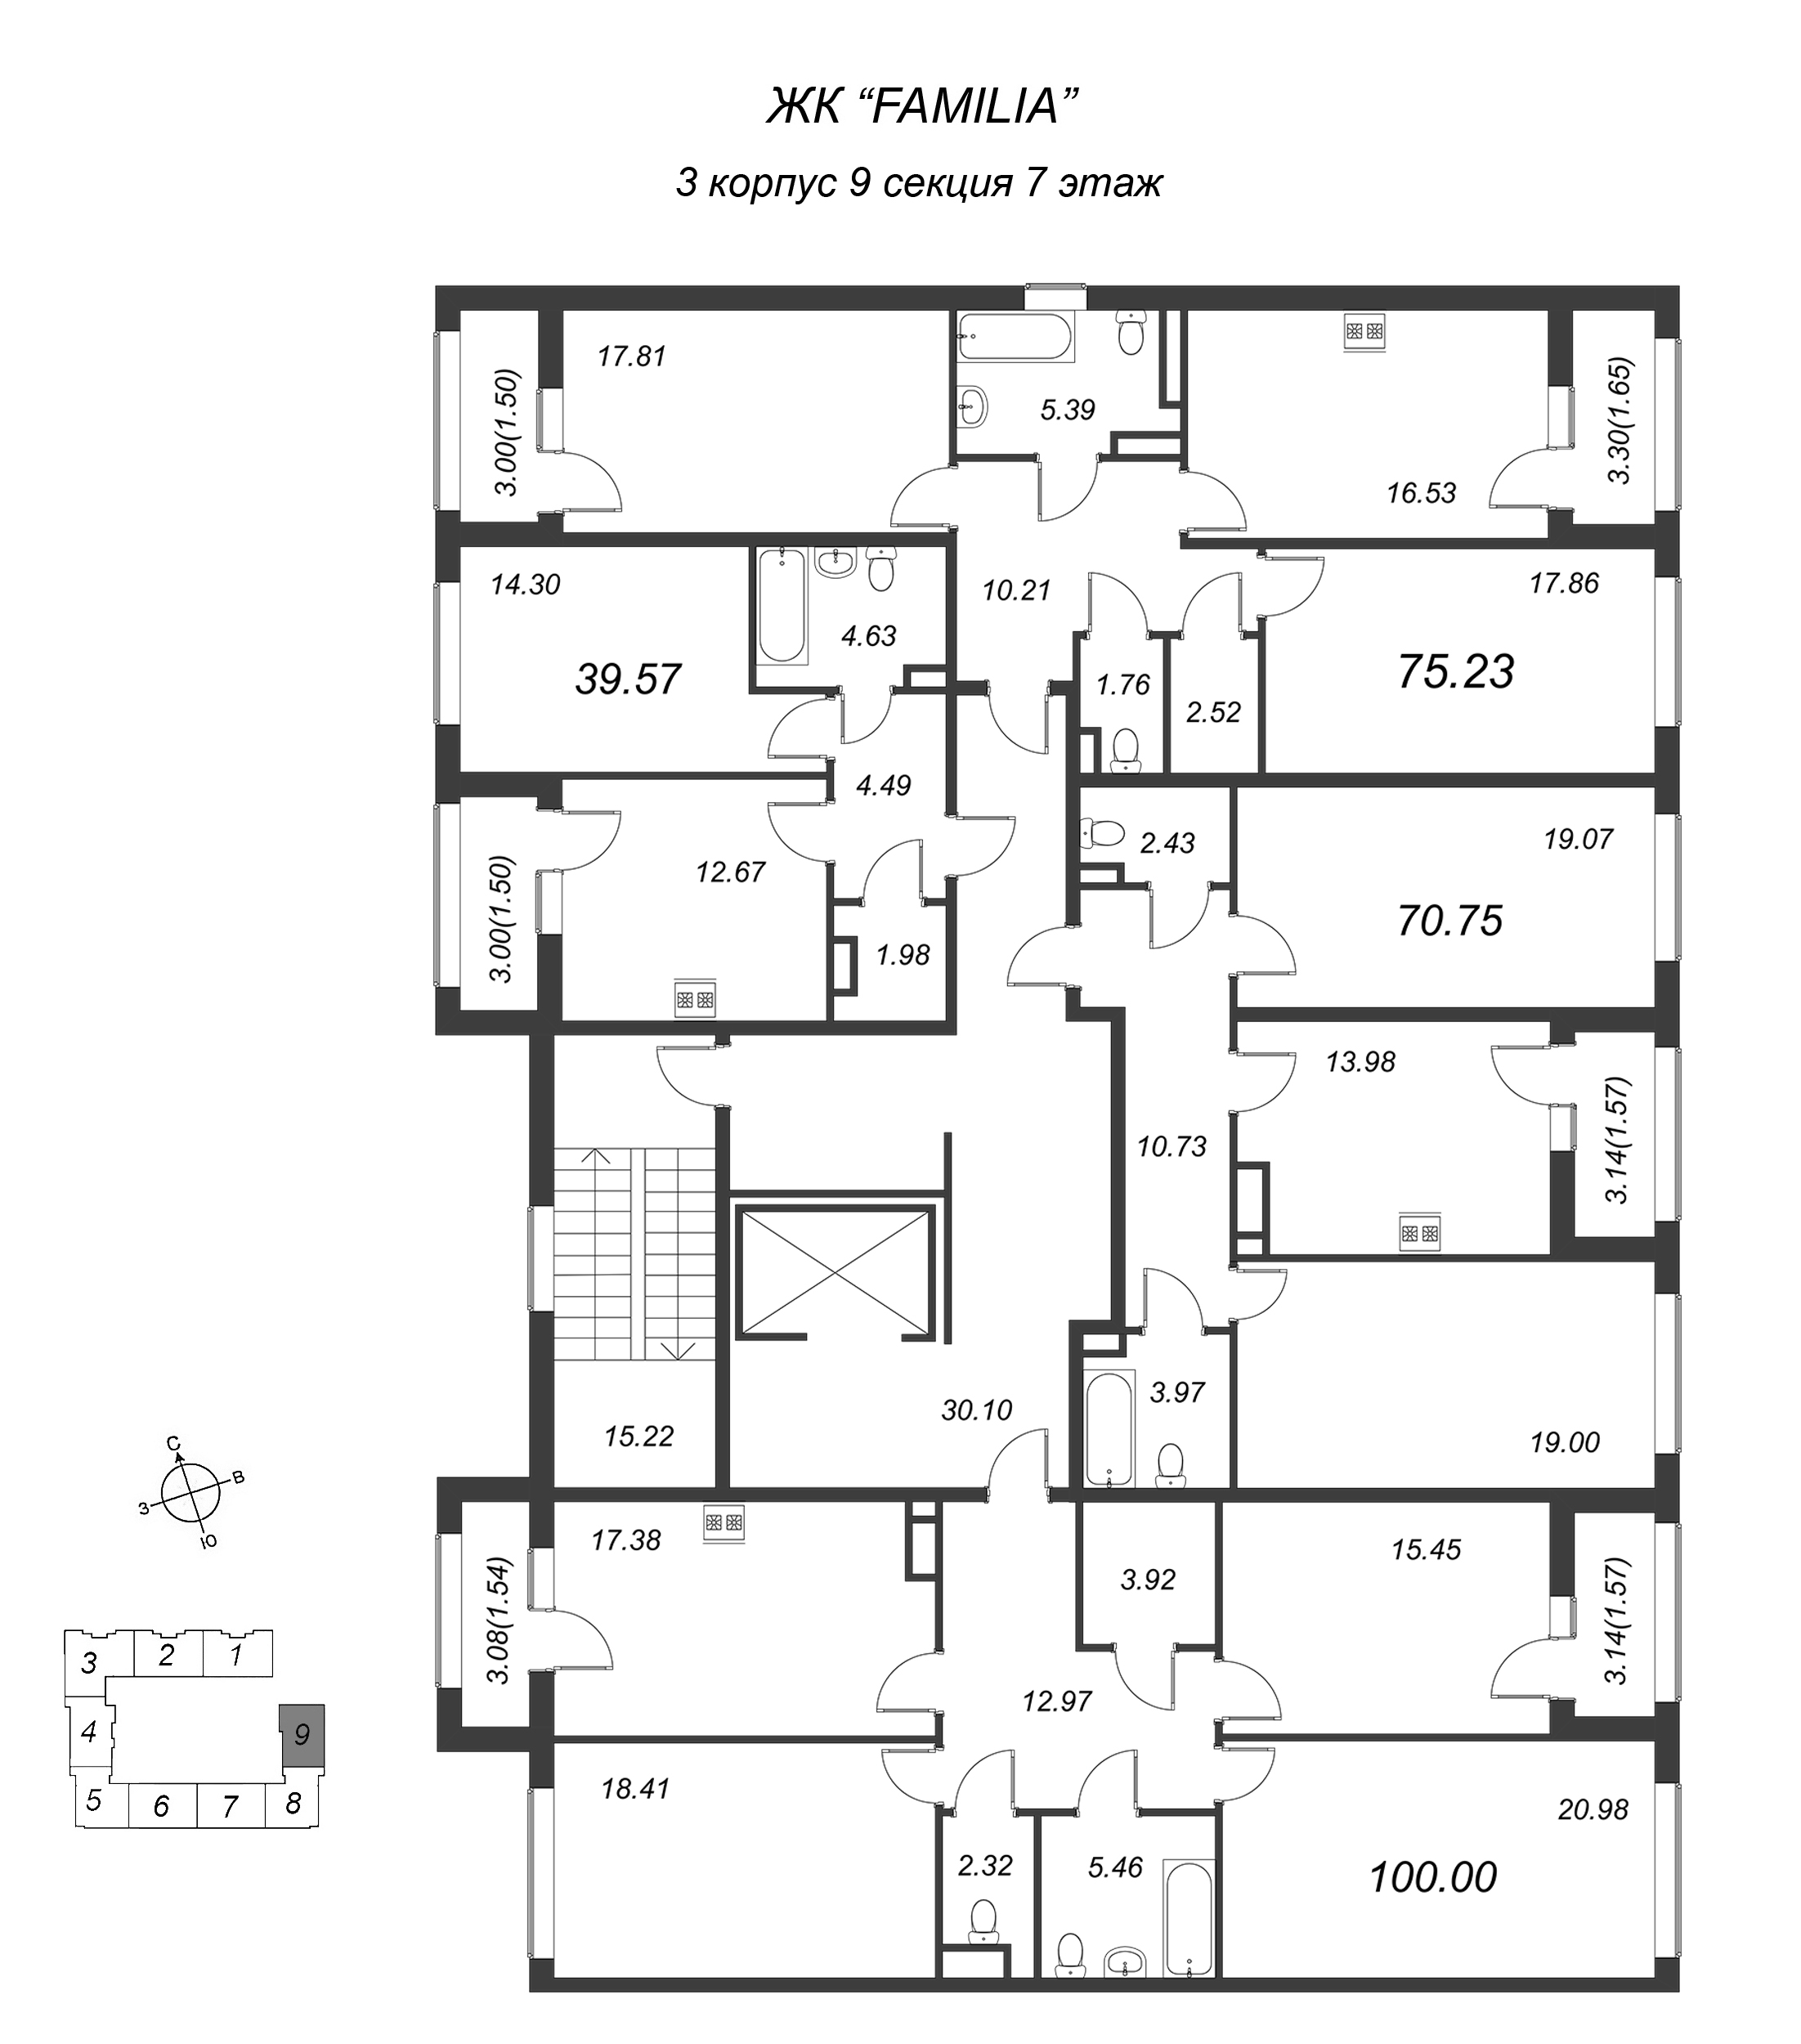 1-комнатная квартира, 39.6 м² в ЖК "FAMILIA" - планировка этажа